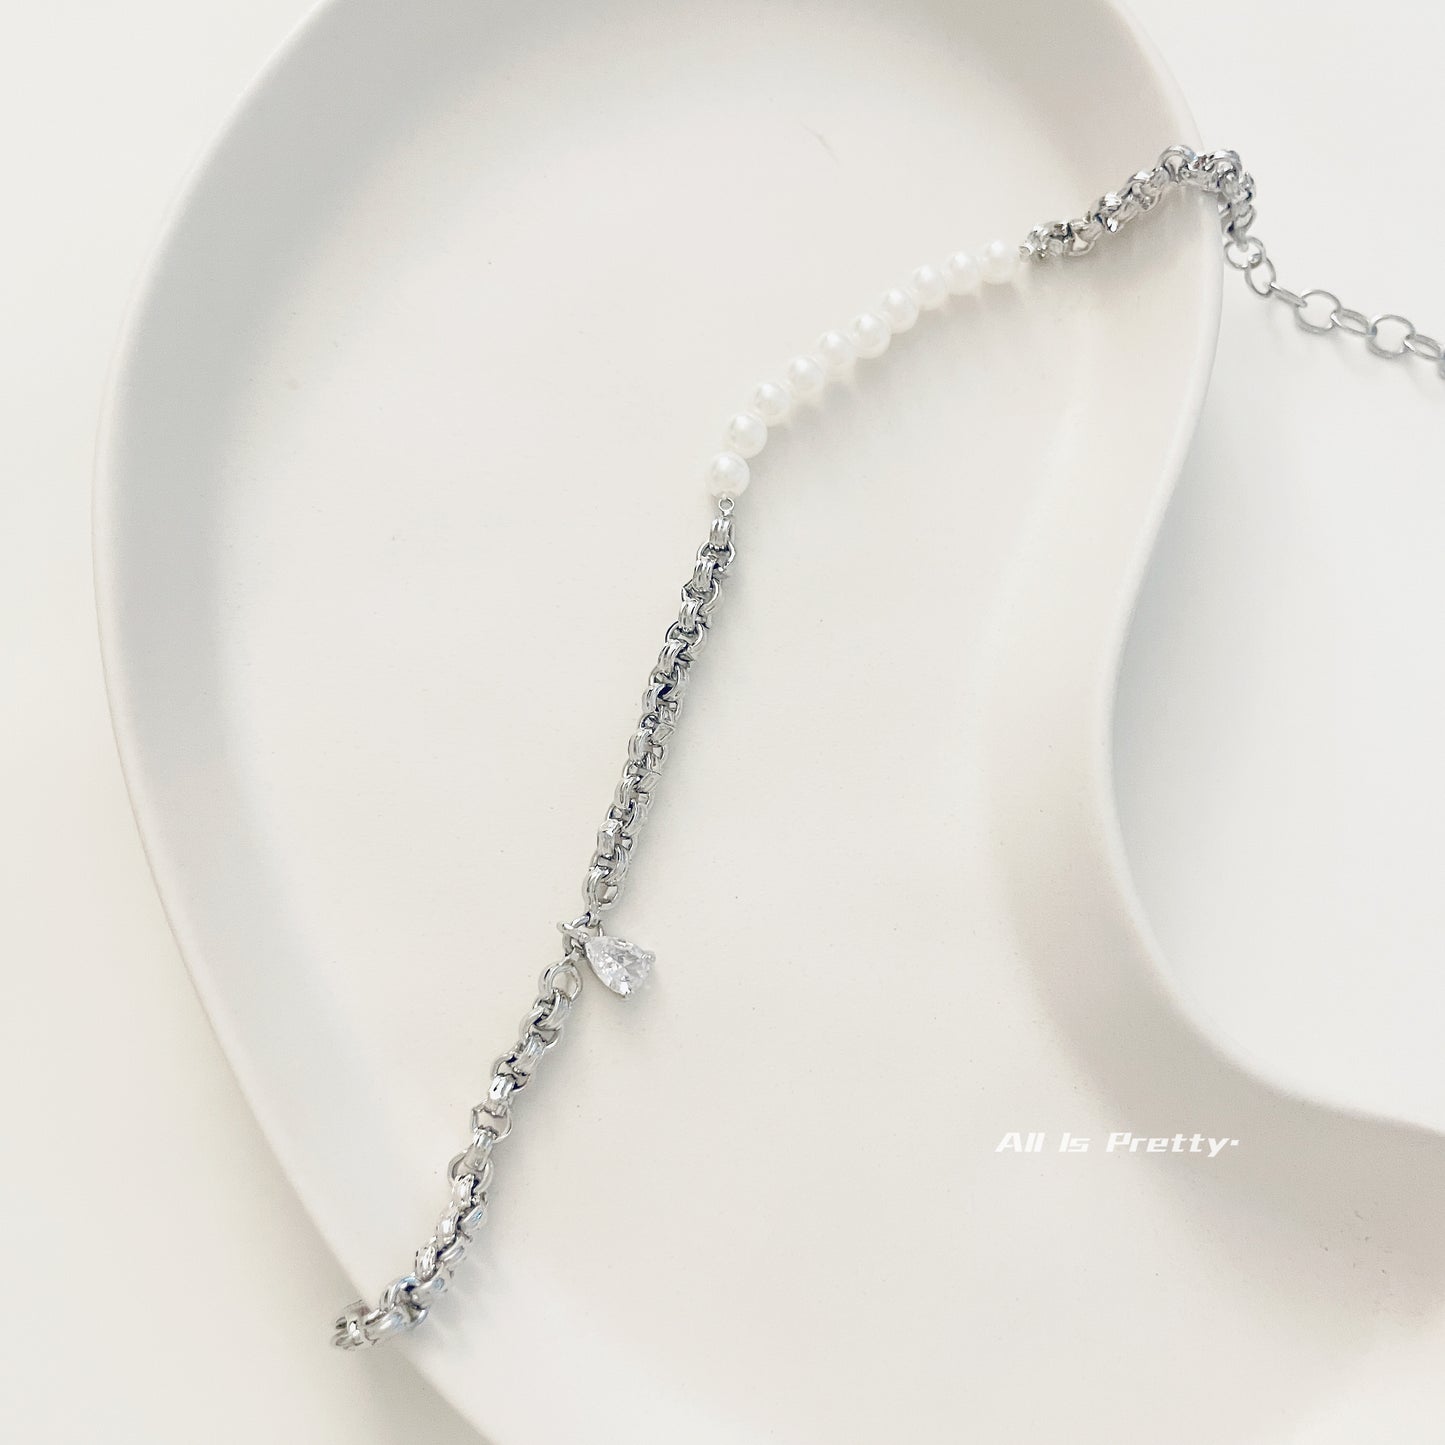 Linked chain pearl bracelet